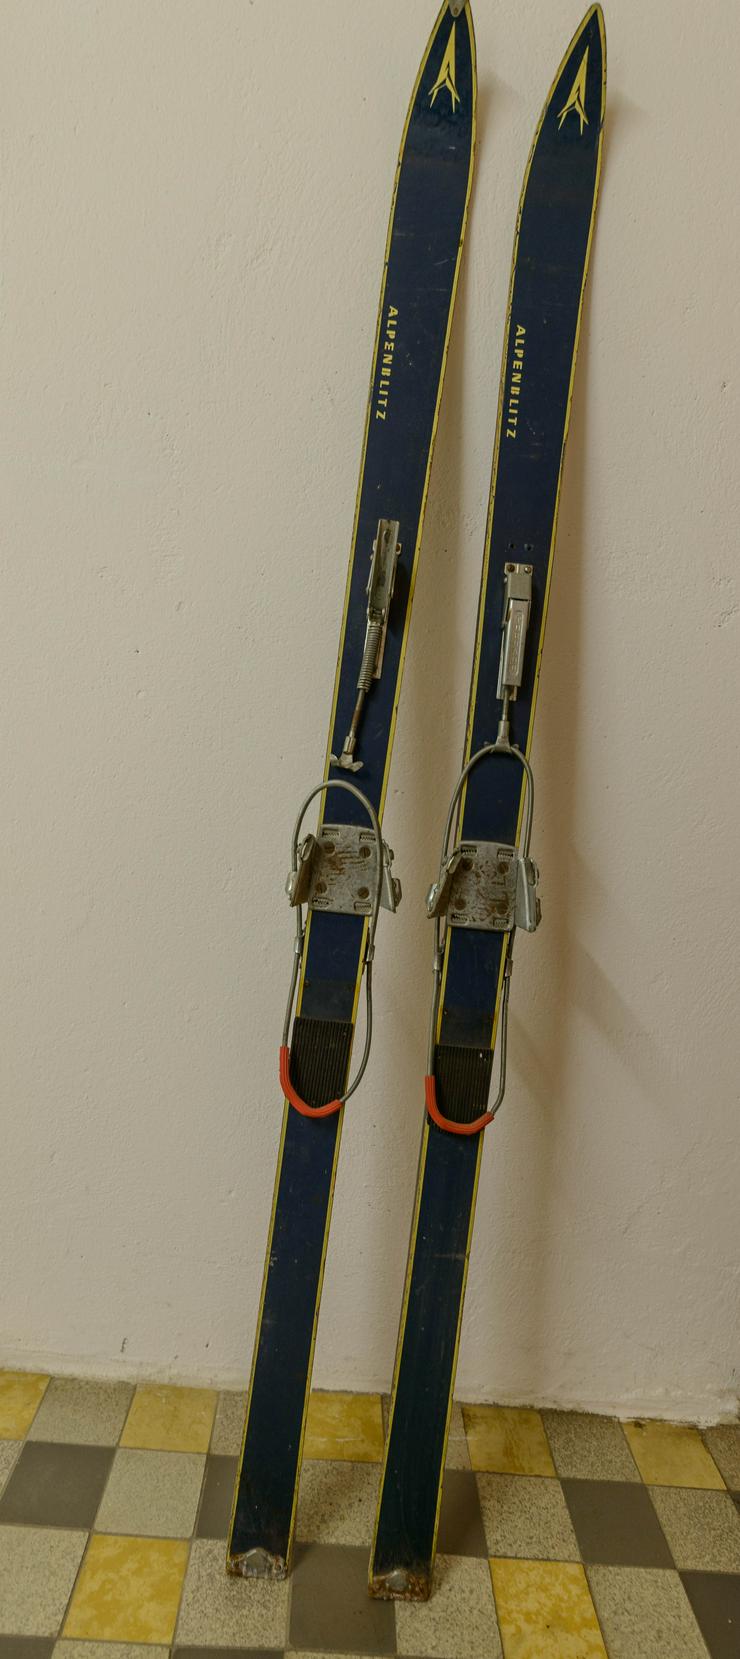 Vintage Ski Atomic "Alpenblitz", blau - 149 cm